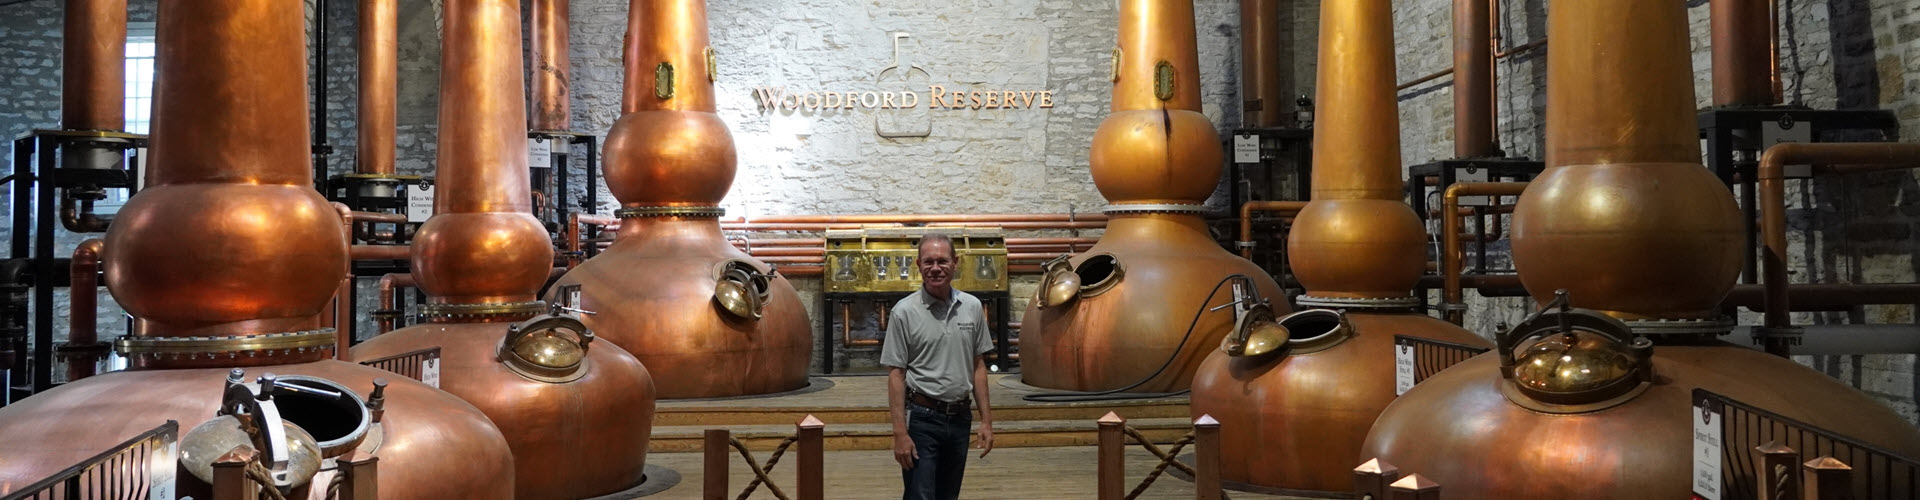 Woodford Reserve Distillery - New Forsyth Pot Stills with Master Distiller Chris Morris